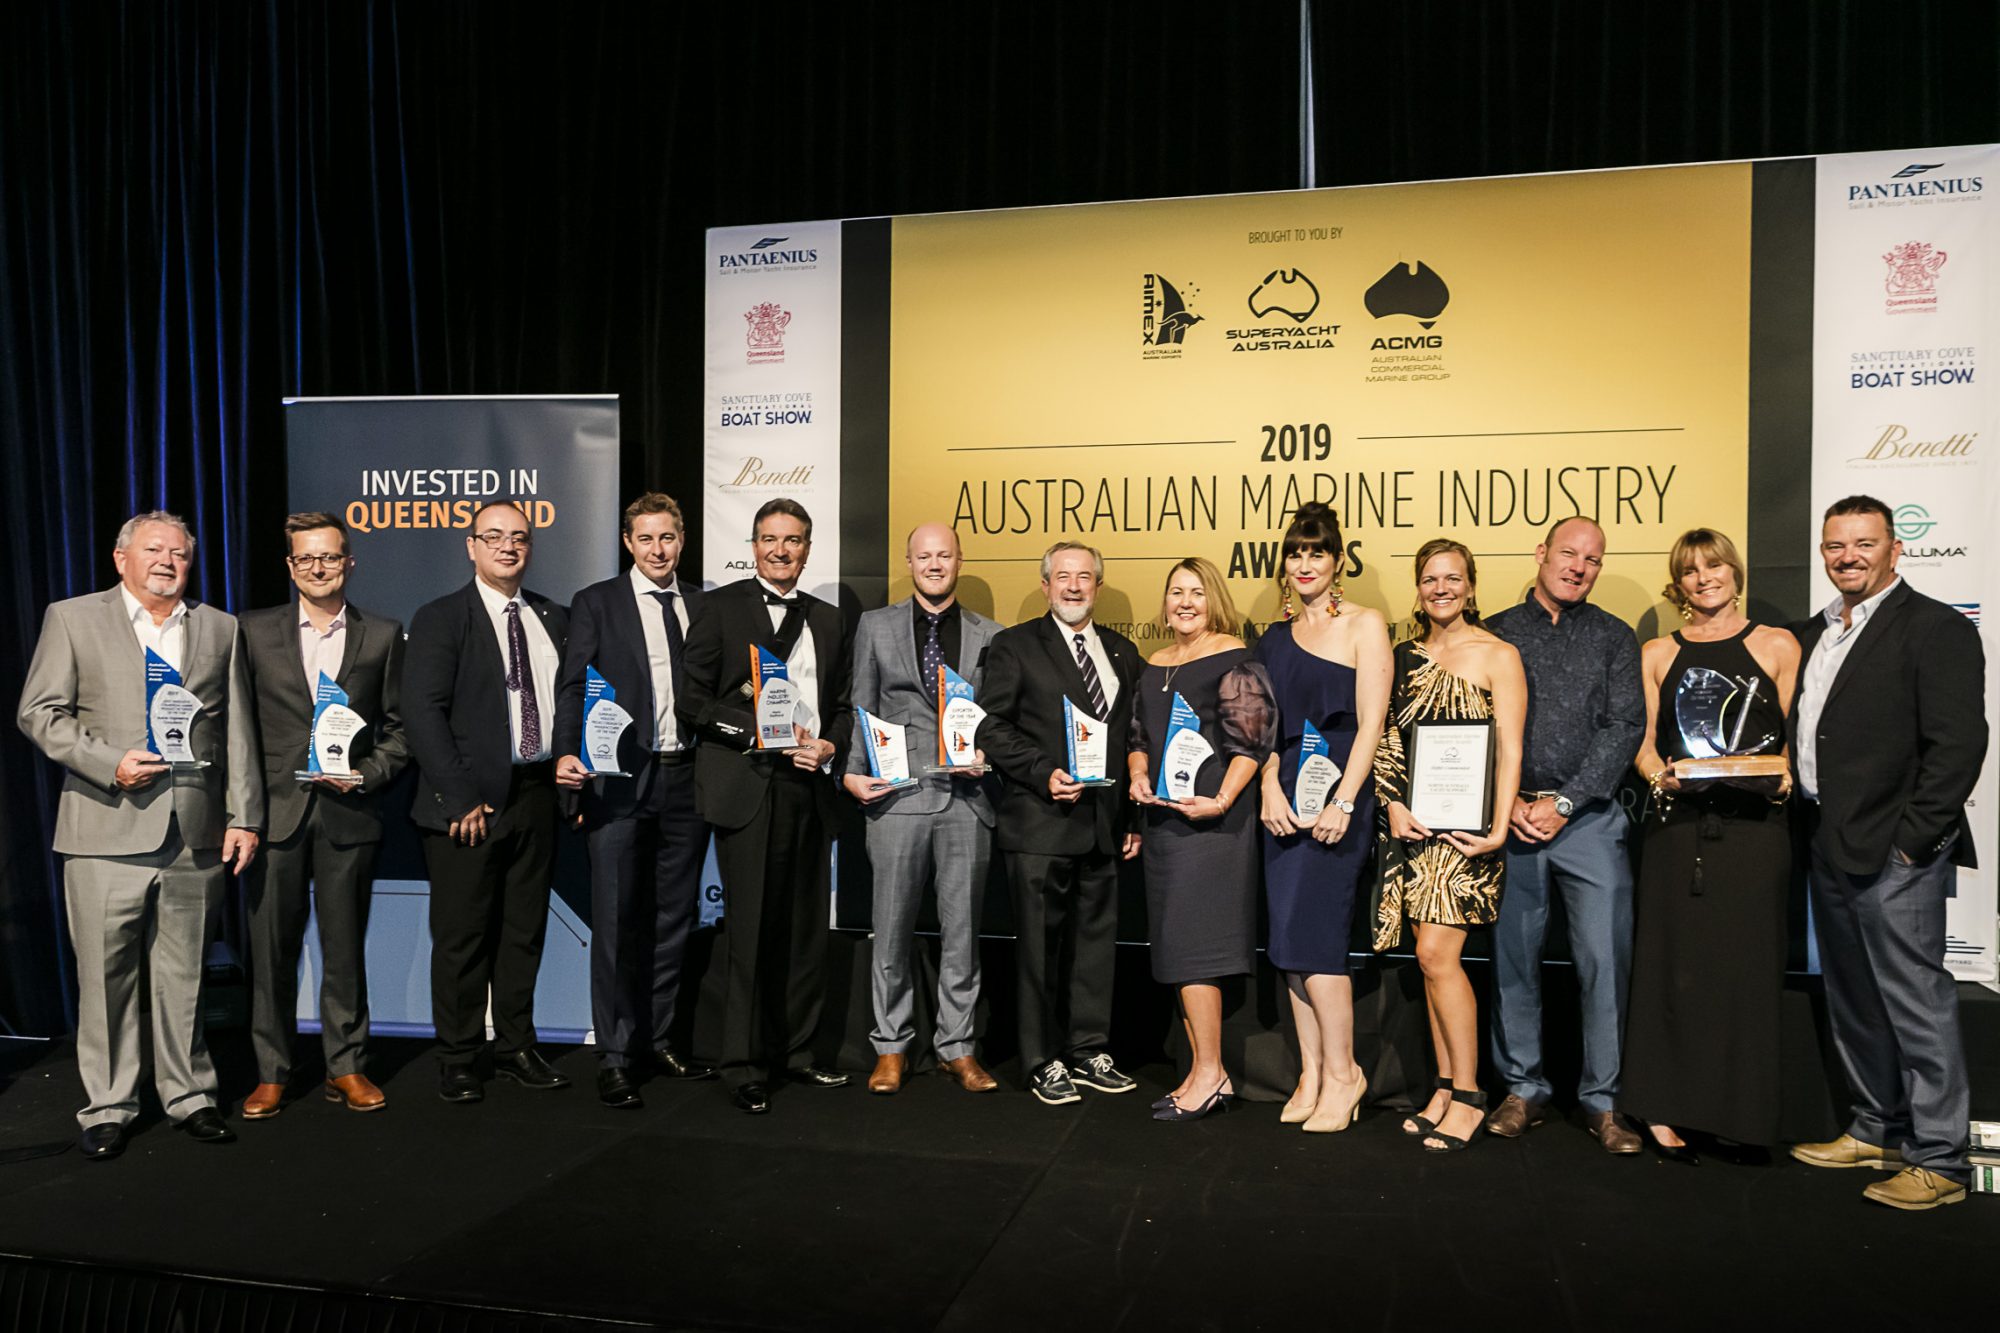 Image 2 – 2019 Award winners